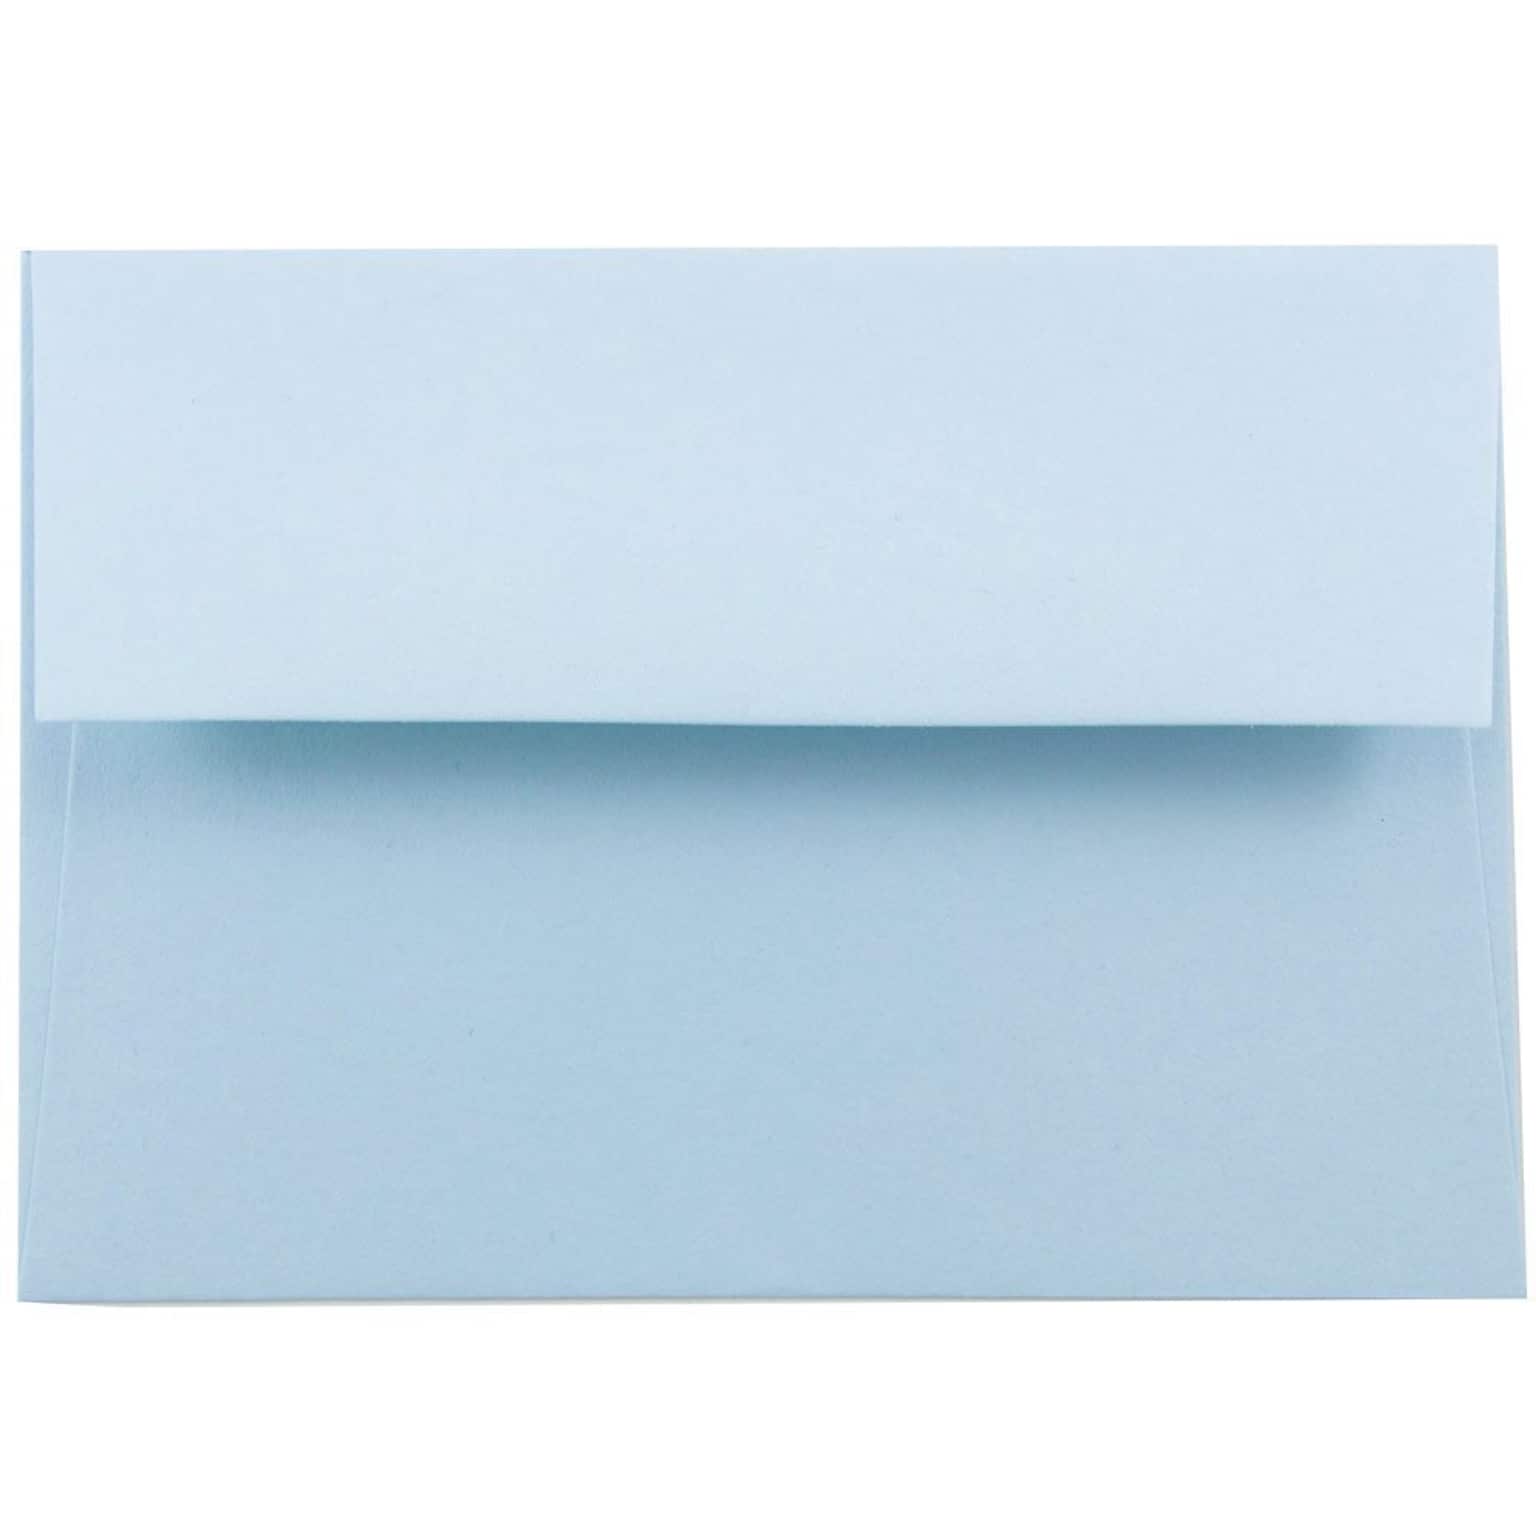 JAM Paper® A7 Invitation Envelopes, 5.25 x 7.25, Baby Blue, 50/Pack (155628I)